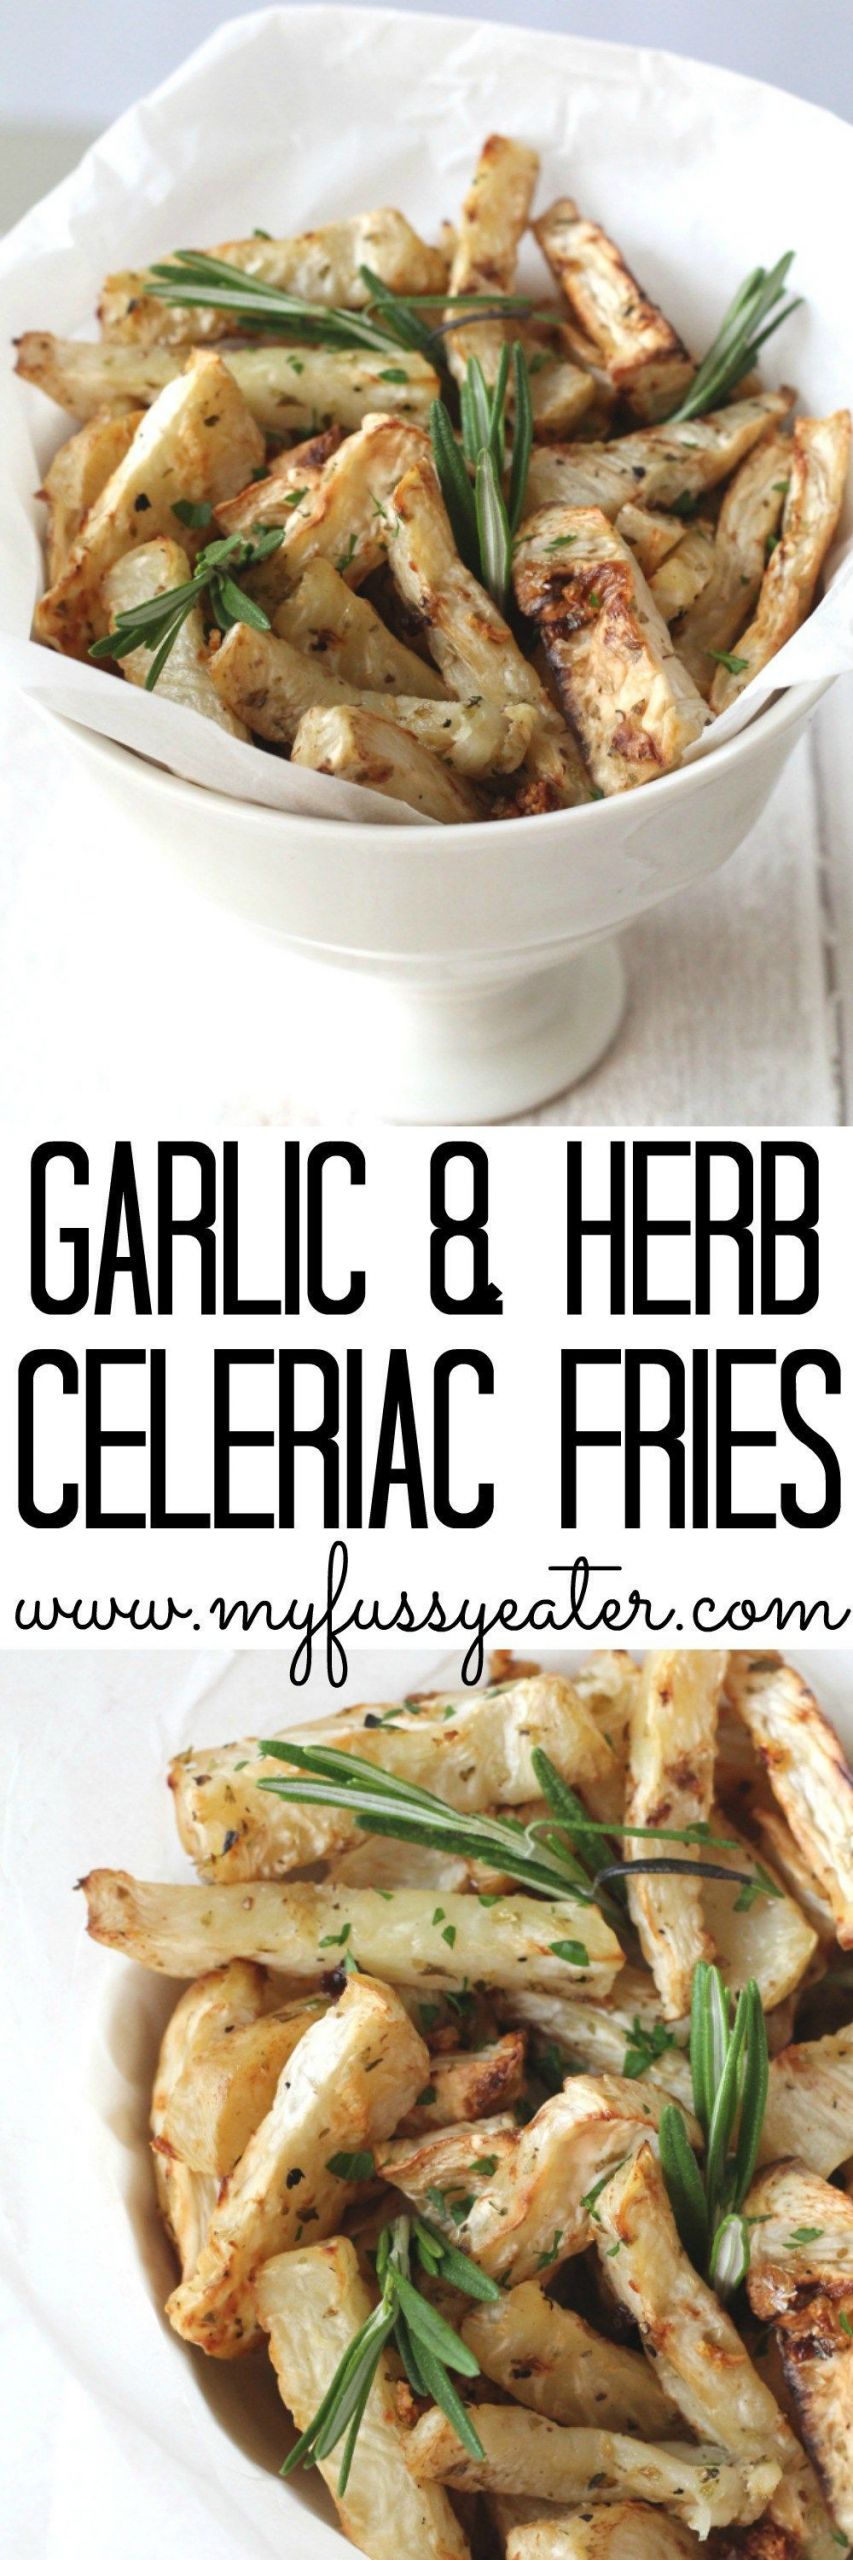 Low Cholesterol Side Dishes
 Garlic & Herb Celeriac Fries Recipe